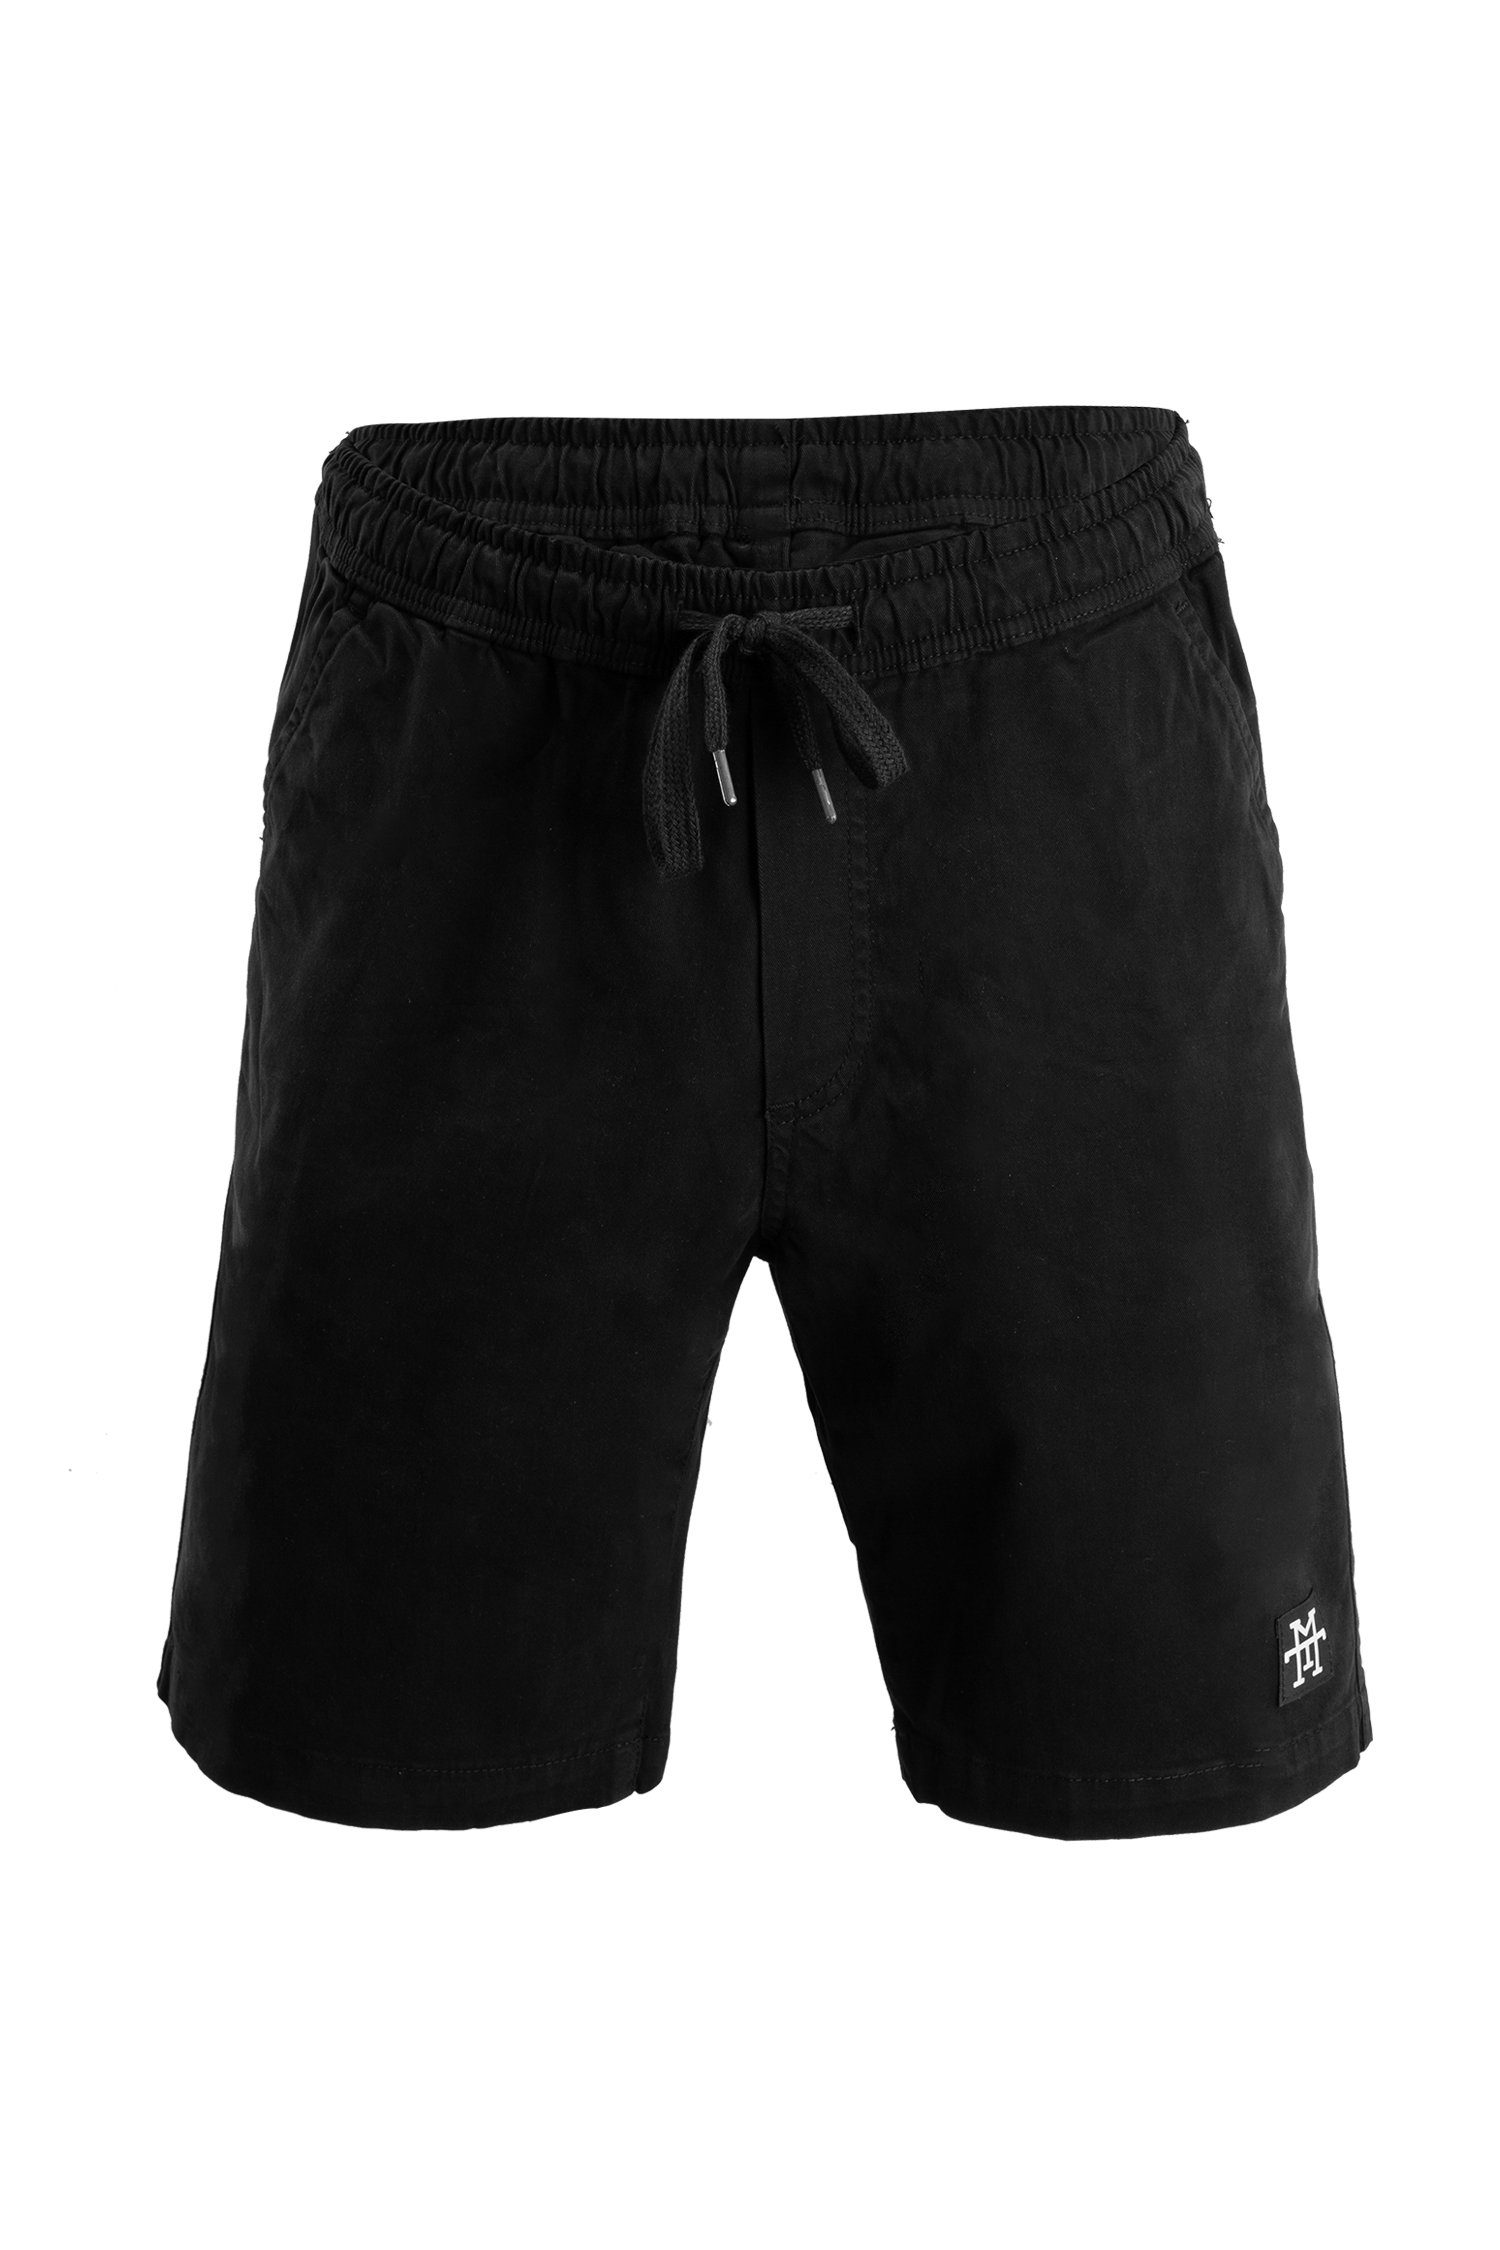 Manufaktur13 Chinoshorts Chino Shorts - Kurze Hose aus dehnbarem Stretch Twill mit Kordelzug / Tunnelzug